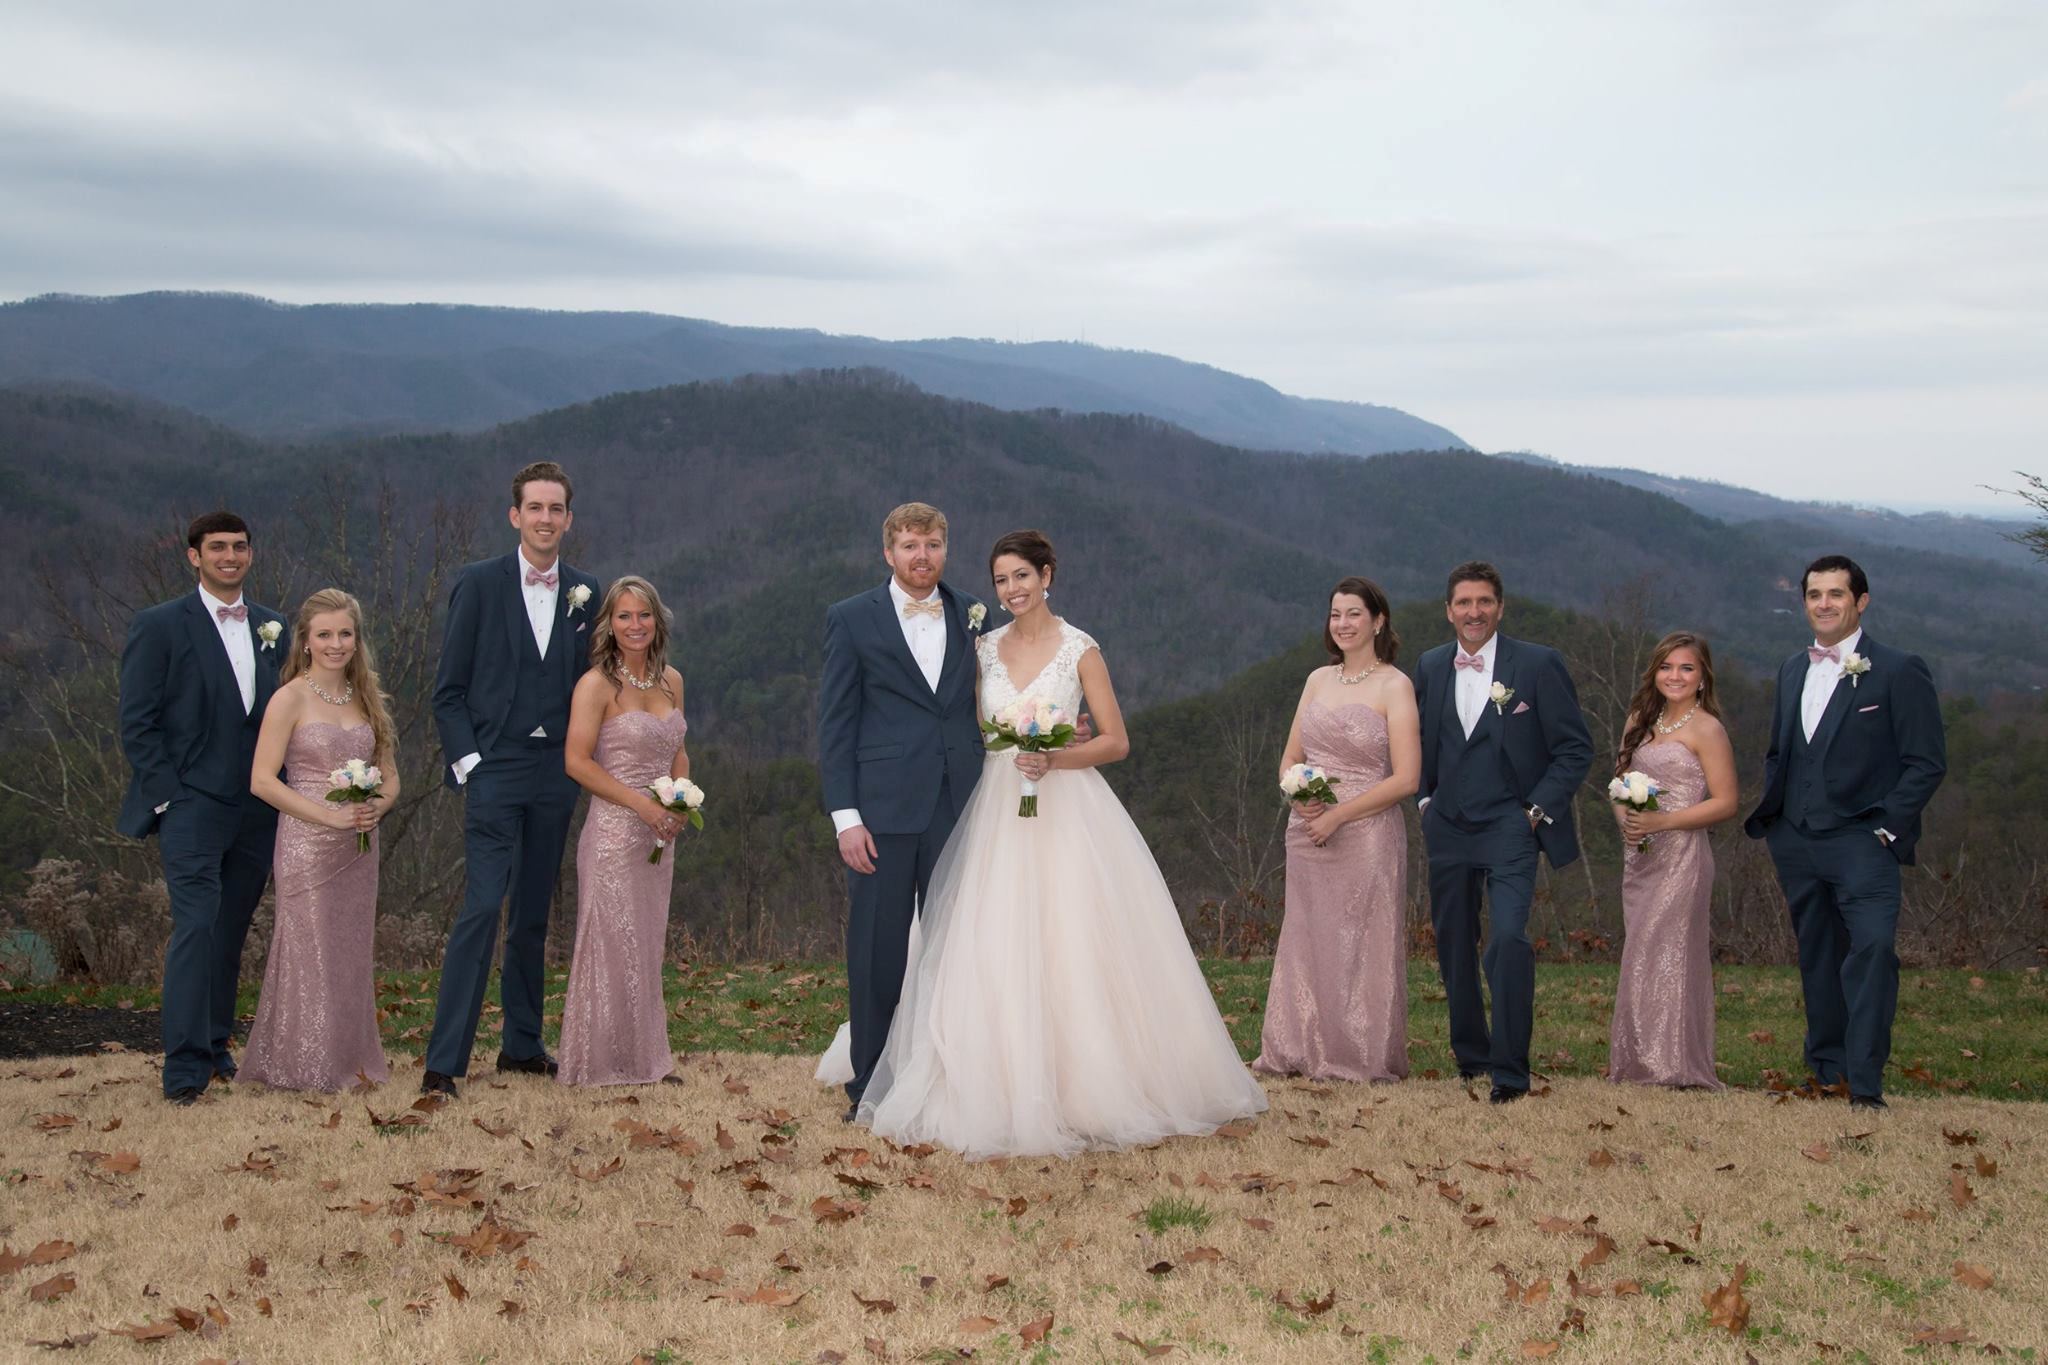 Eden Crest Weddings in the Smoky Mountains - 1